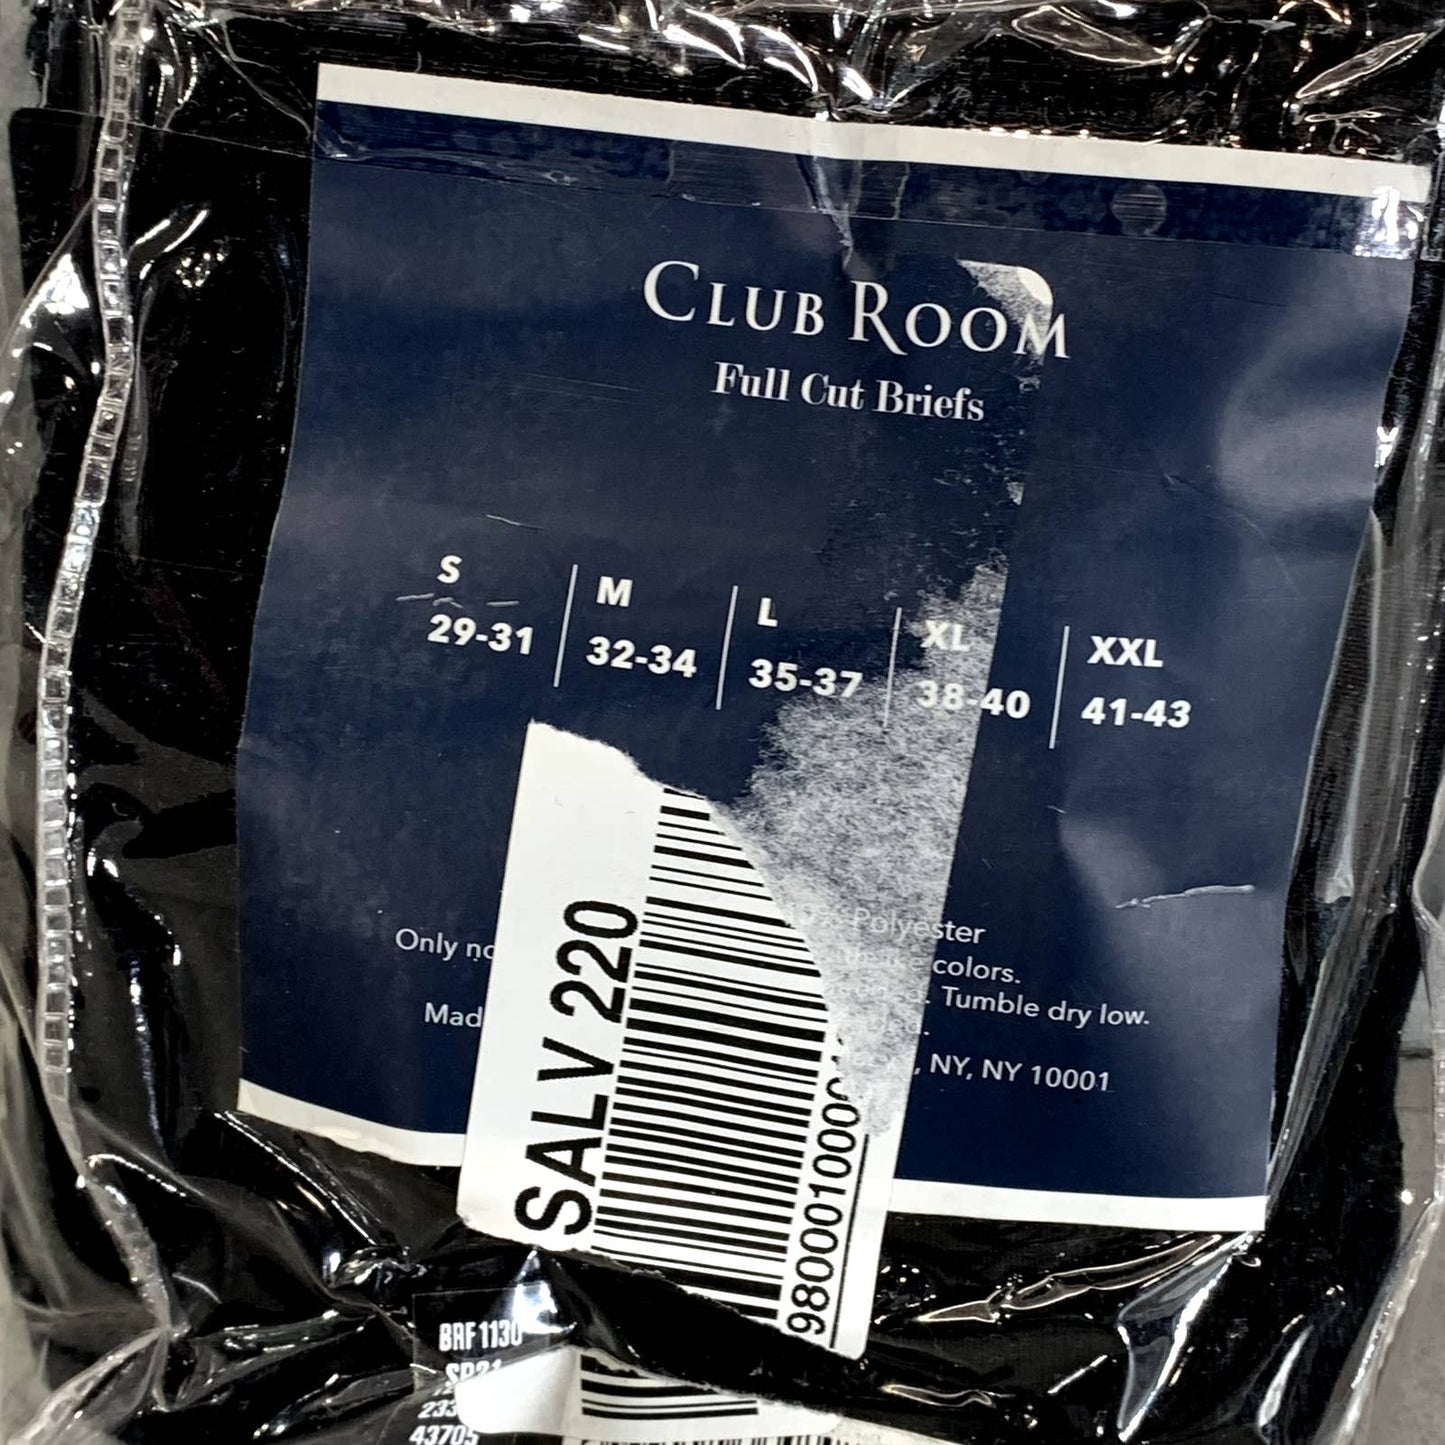 CLUB ROOM Men's Solid Black Full-Cut Tagless No-Ride Up 8-Pack Briefs SZ XL